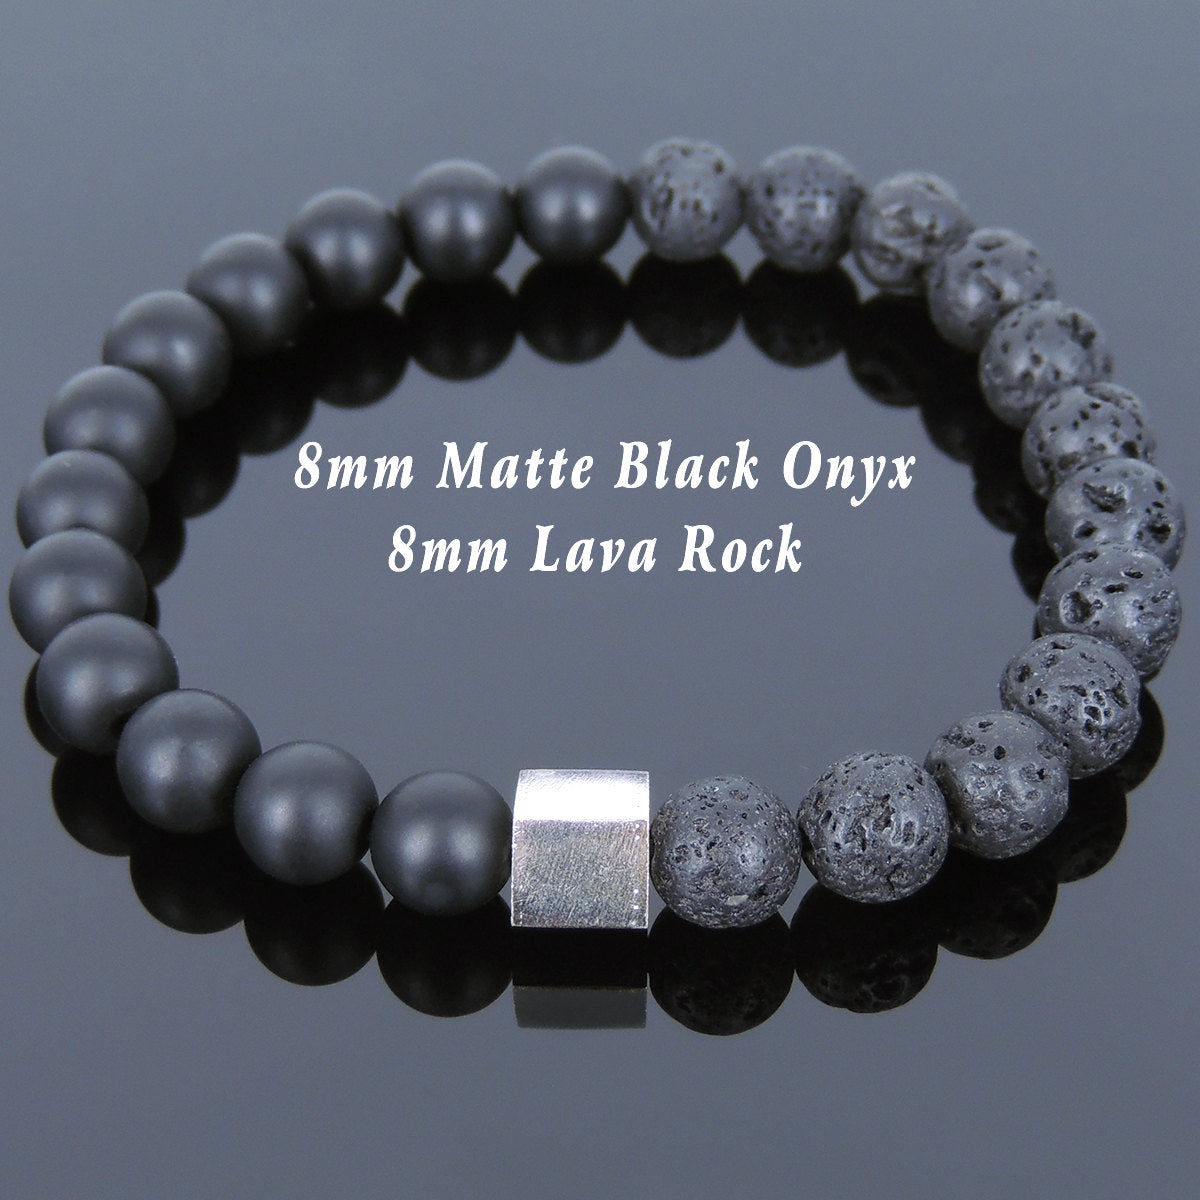 8mm Lava Rock & Matte Black Onyx Healing Stone Bracelet with S925 Sterling Silver Geometric Cube Balance Bead - Handmade by Gem & Silver BR676